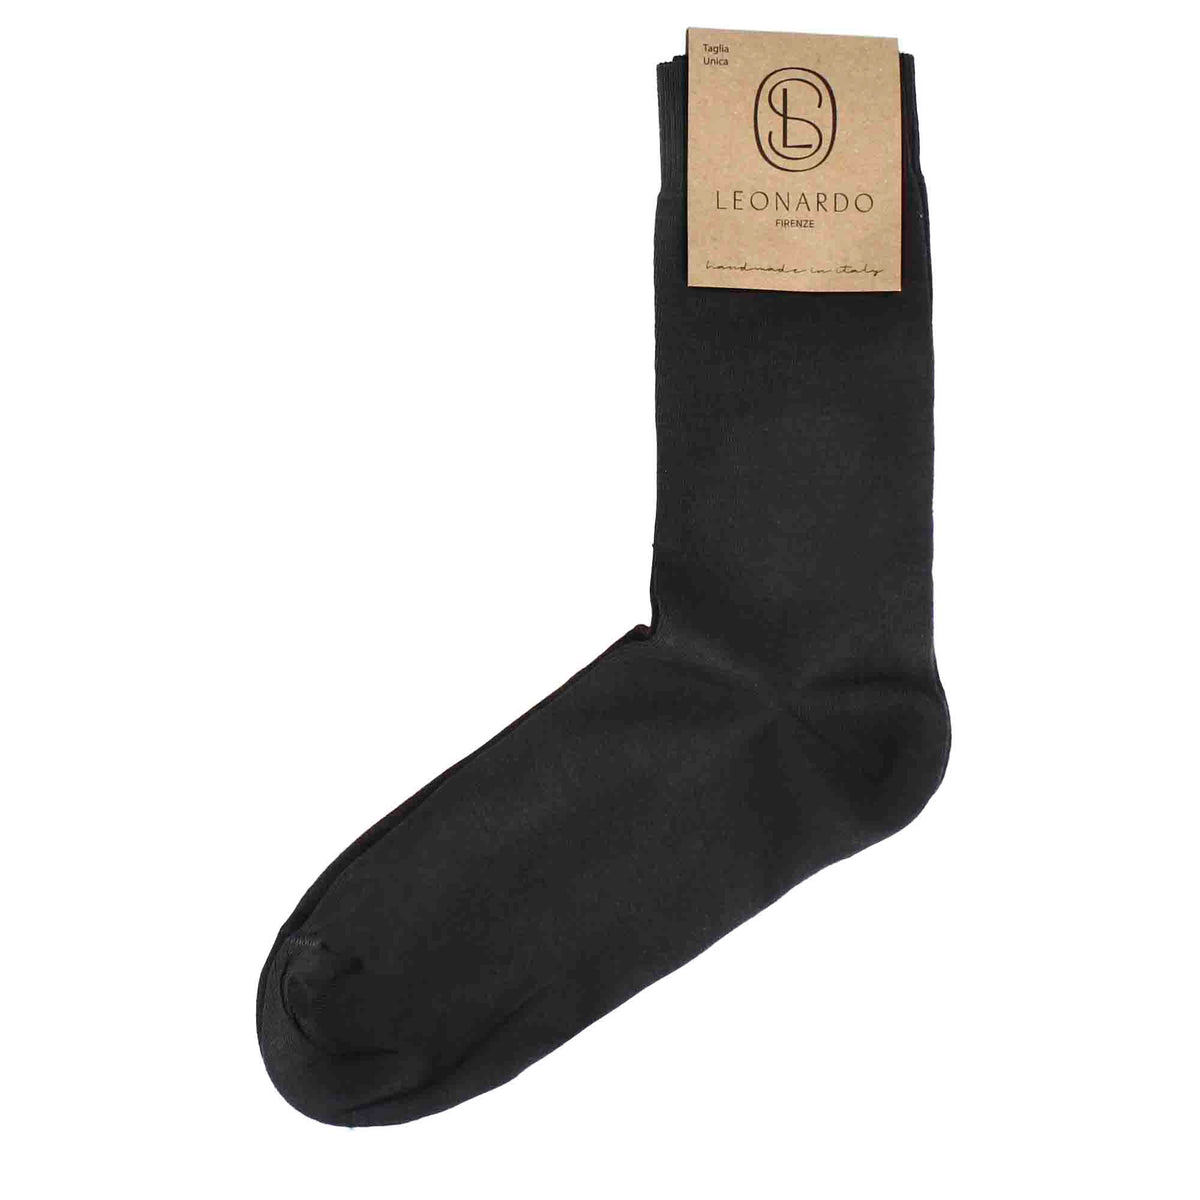 Men's plain grey cotton socks